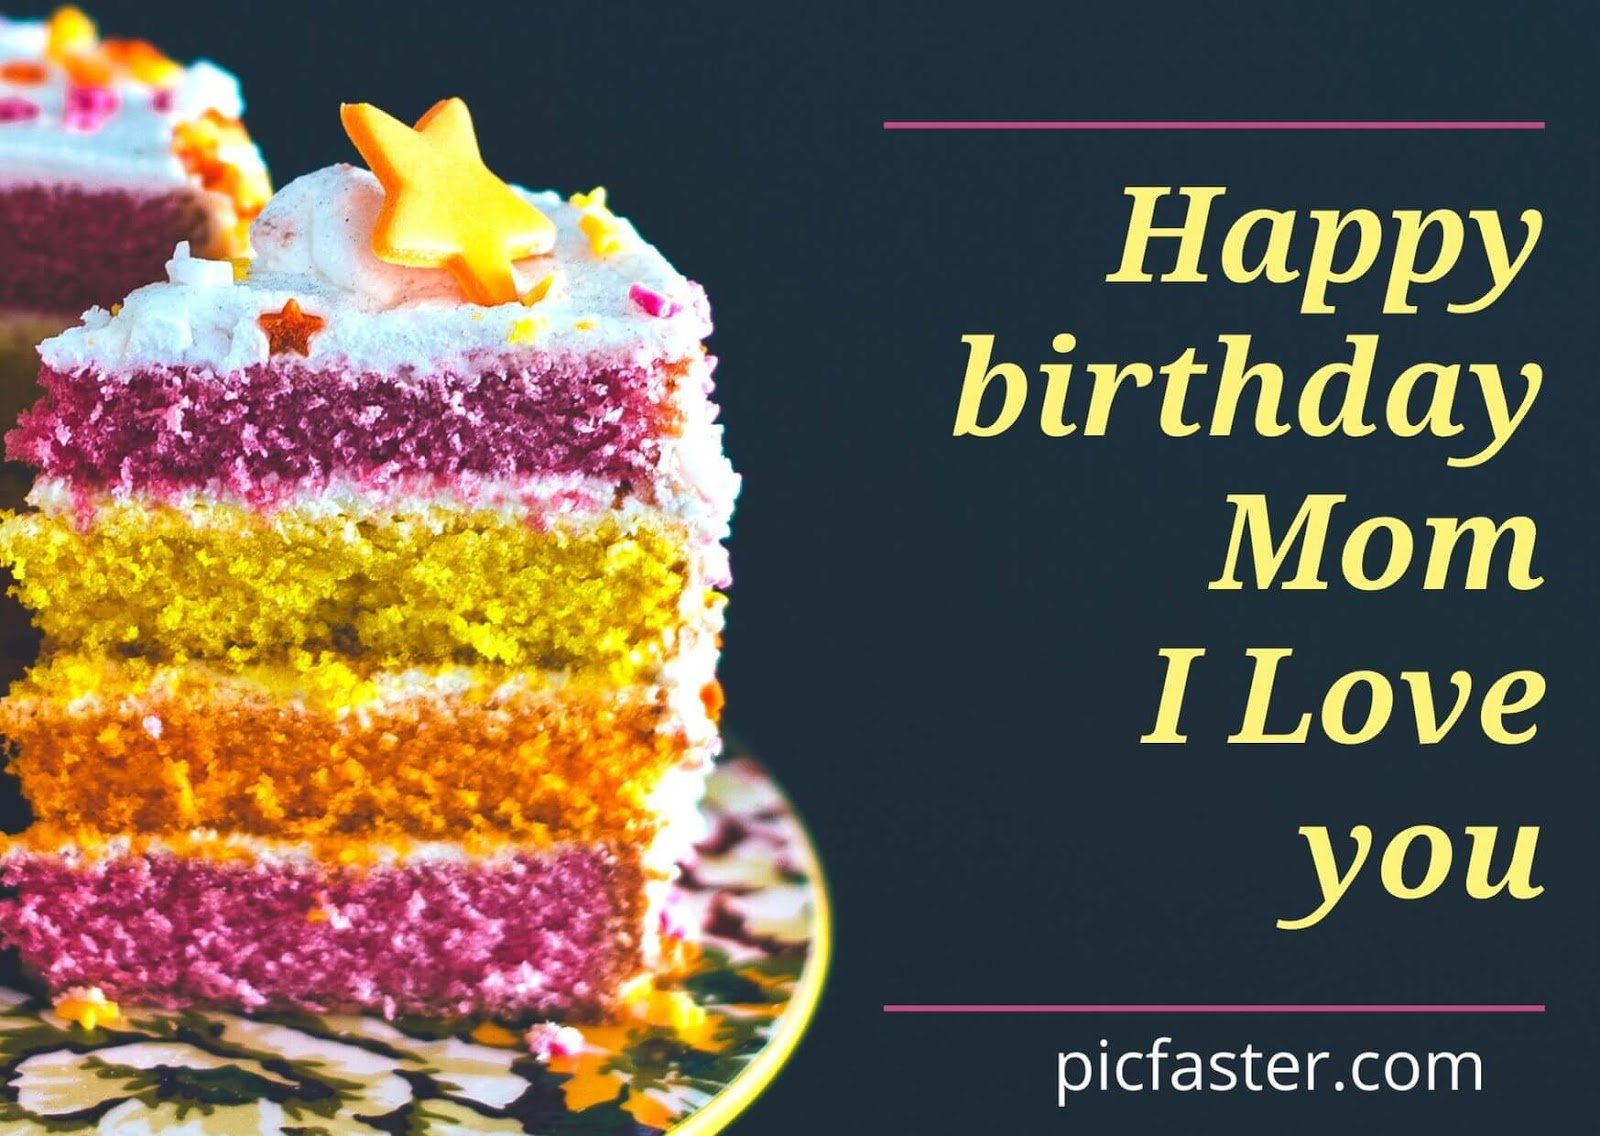 Happy Birthday Mom Image, Photo, Wishes Free Download